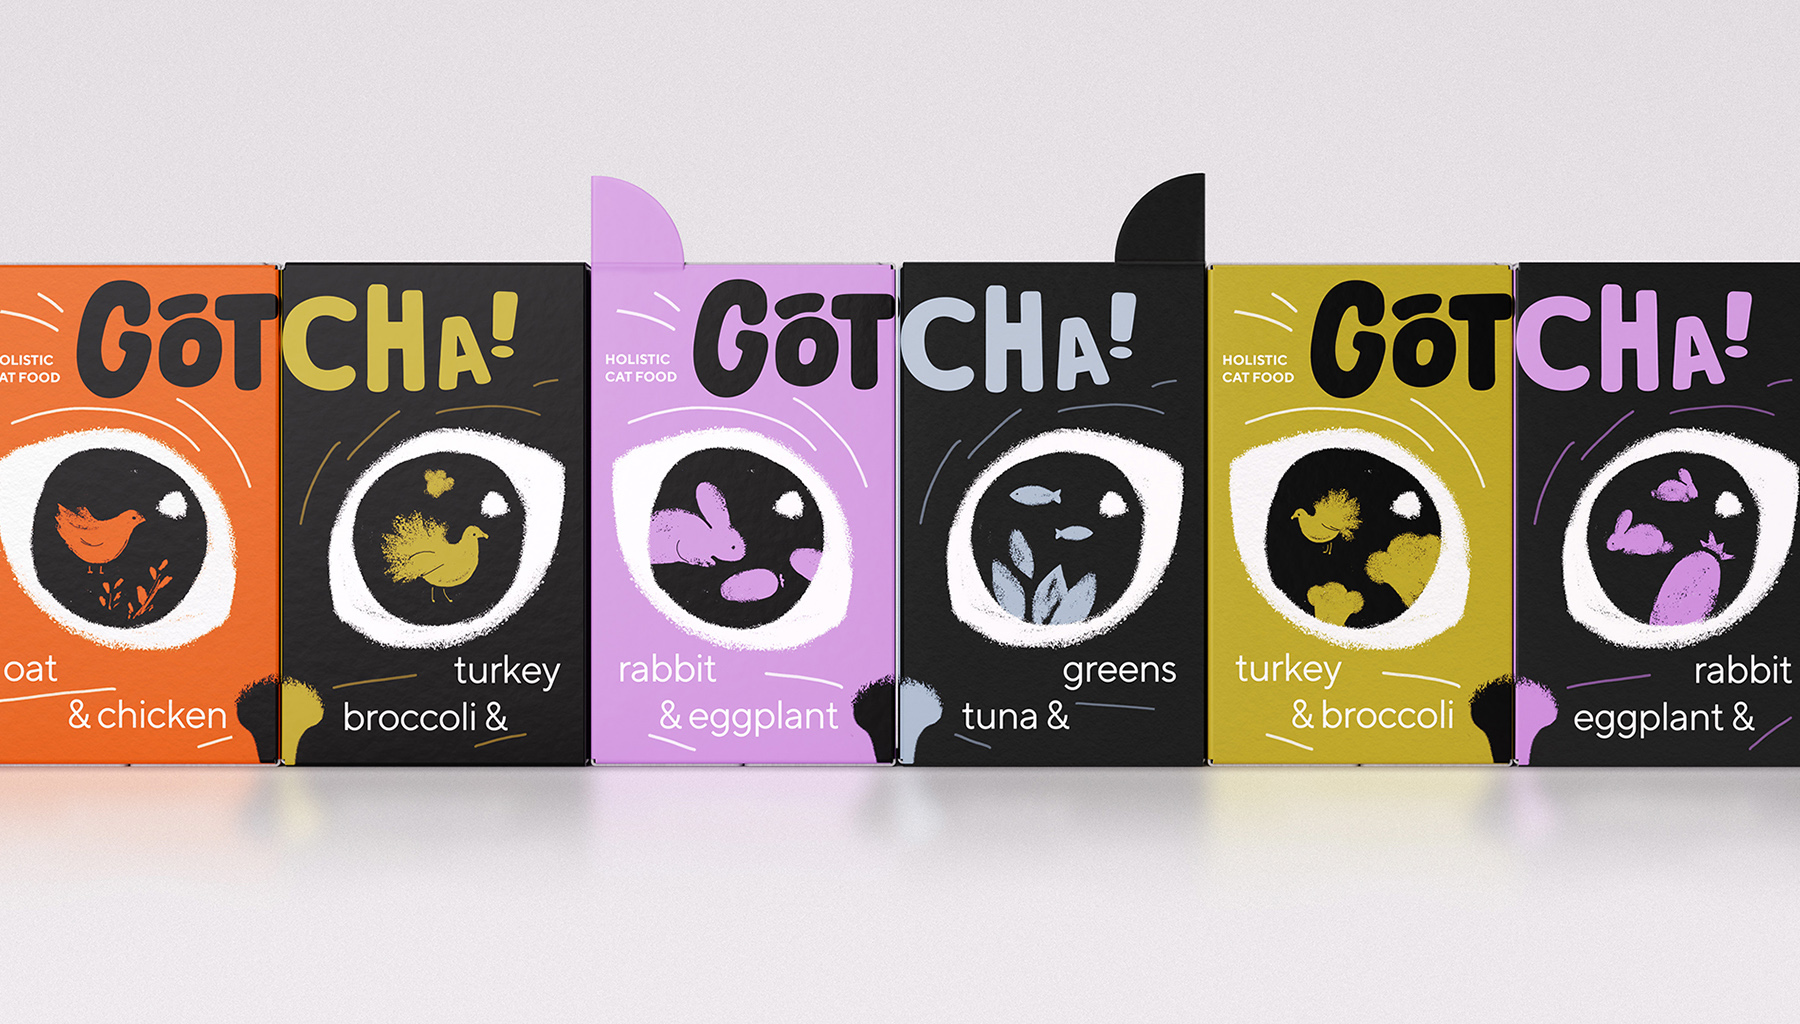 Gotcha! Unleashing the Wild: Innovative Cat Food Packaging Design by Daria Kalenchuk